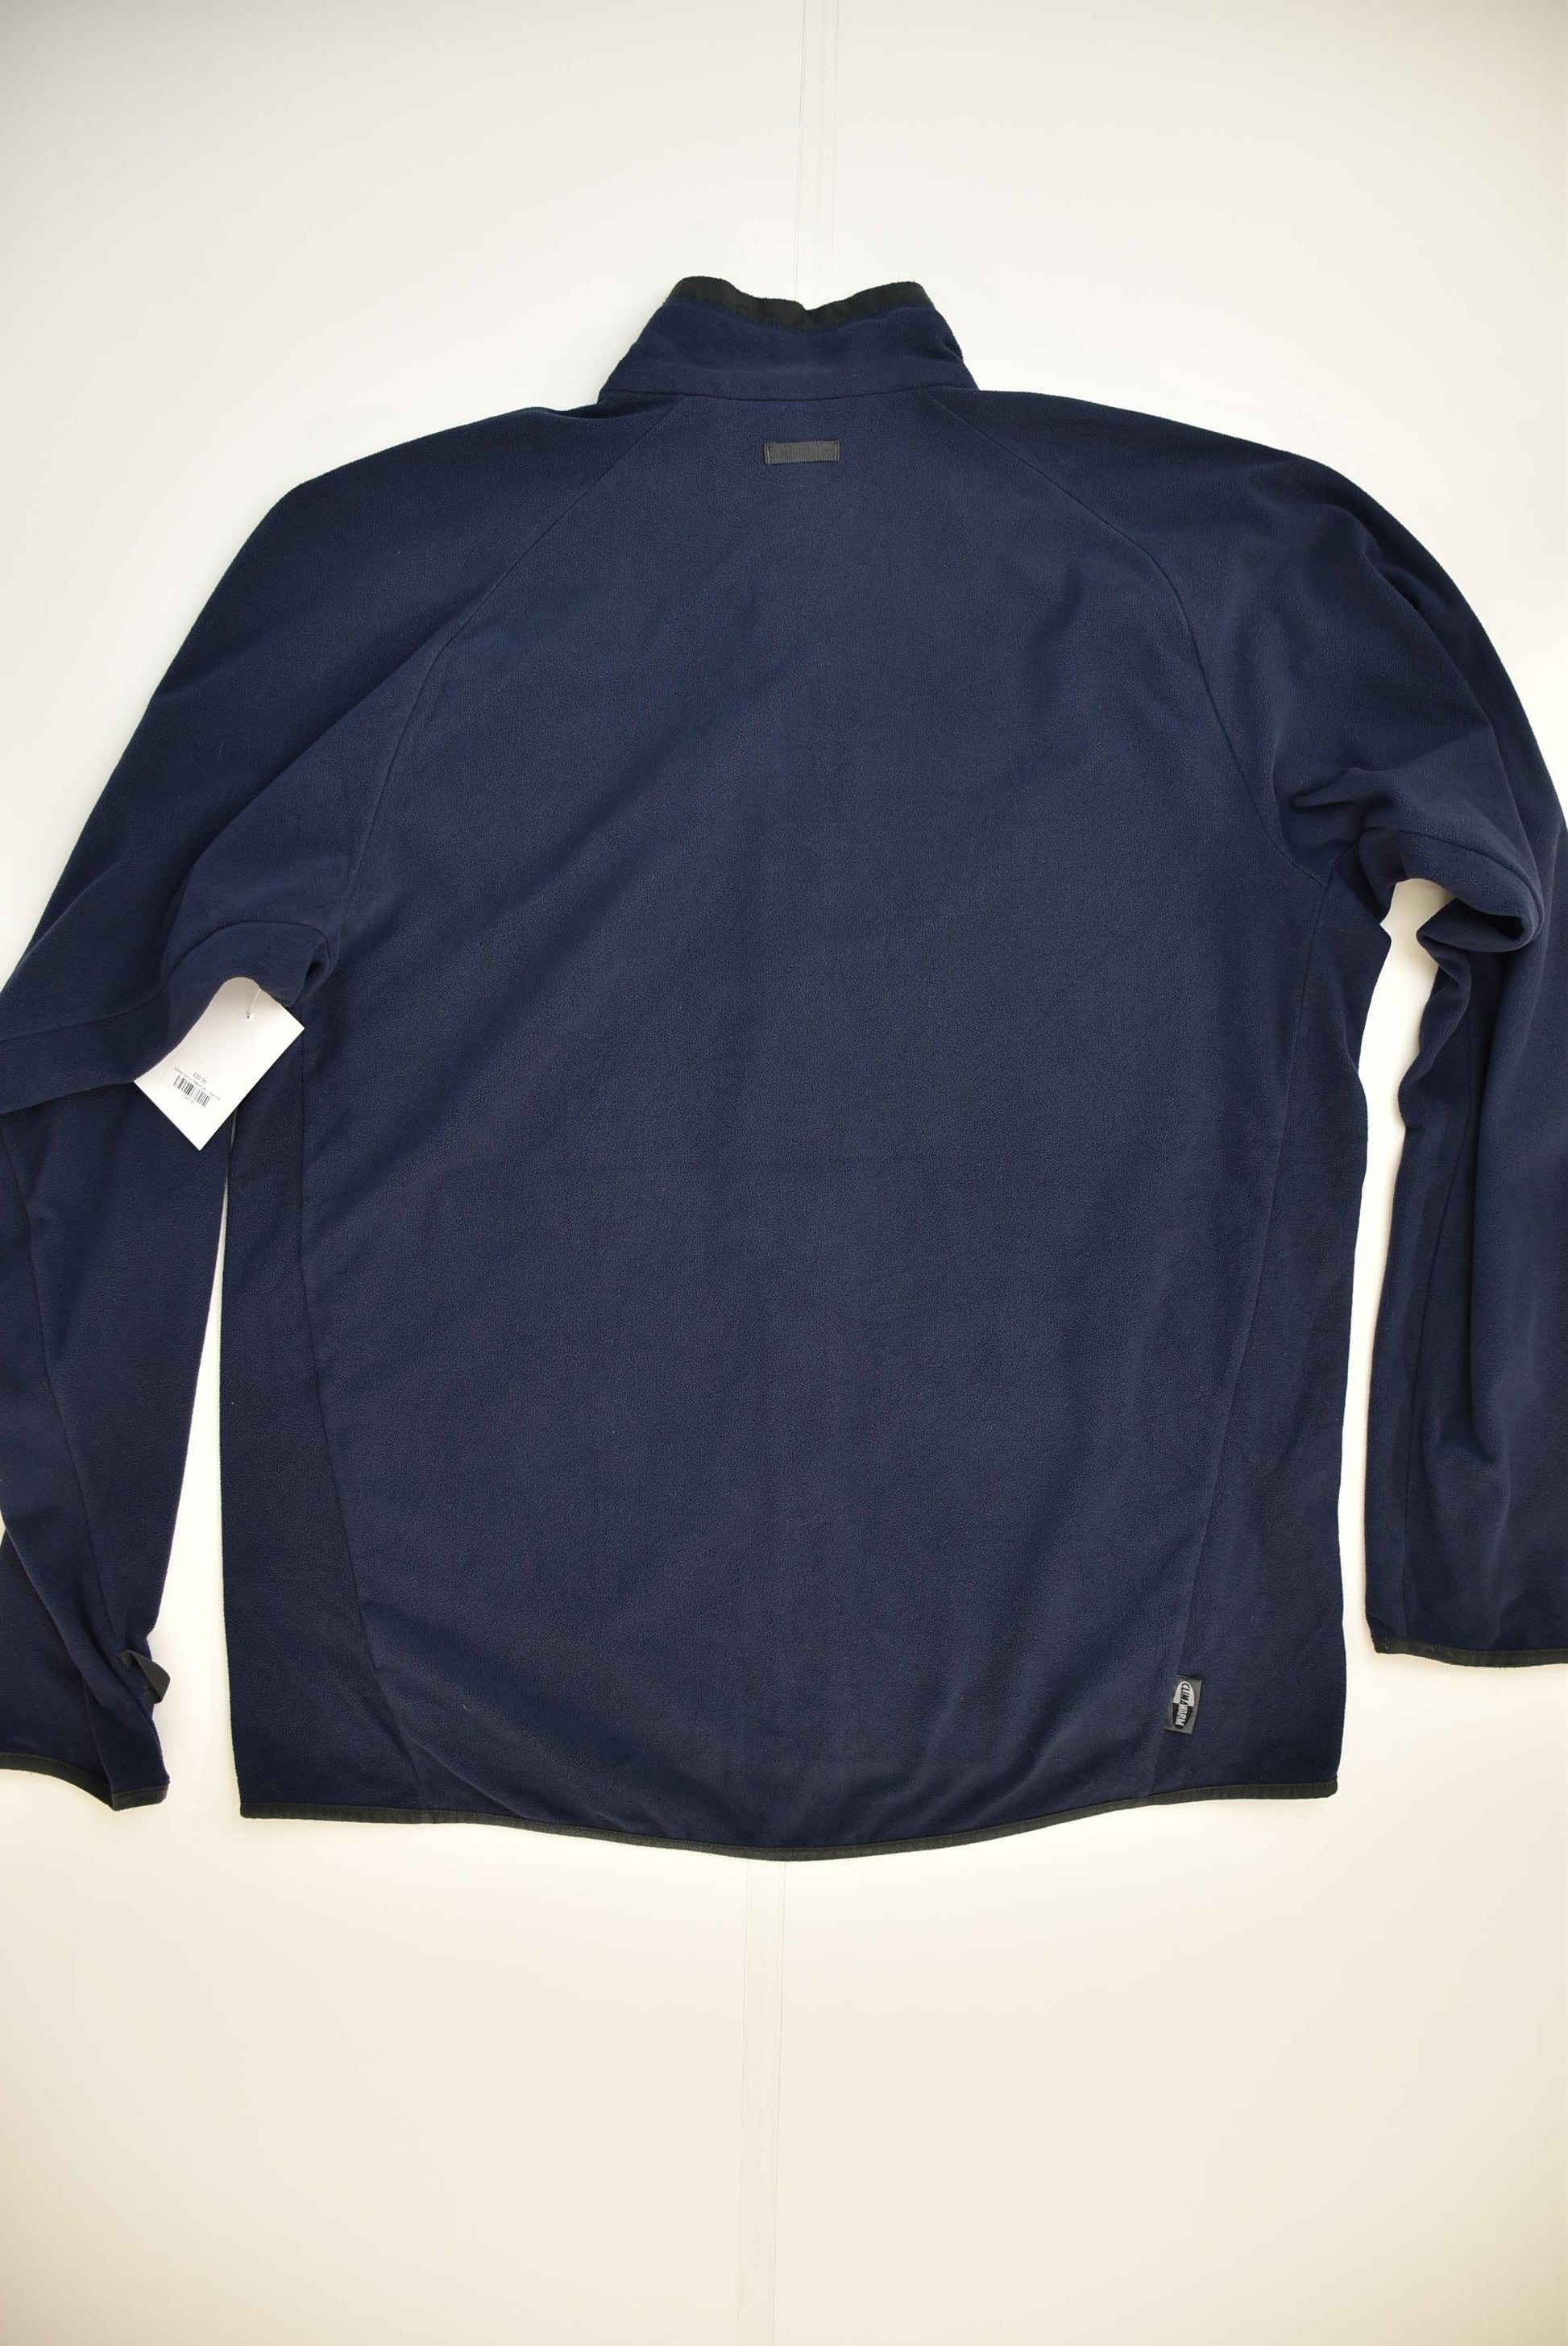 Adidas Zip-Up Fleece (XL) - Slayyy Vintage